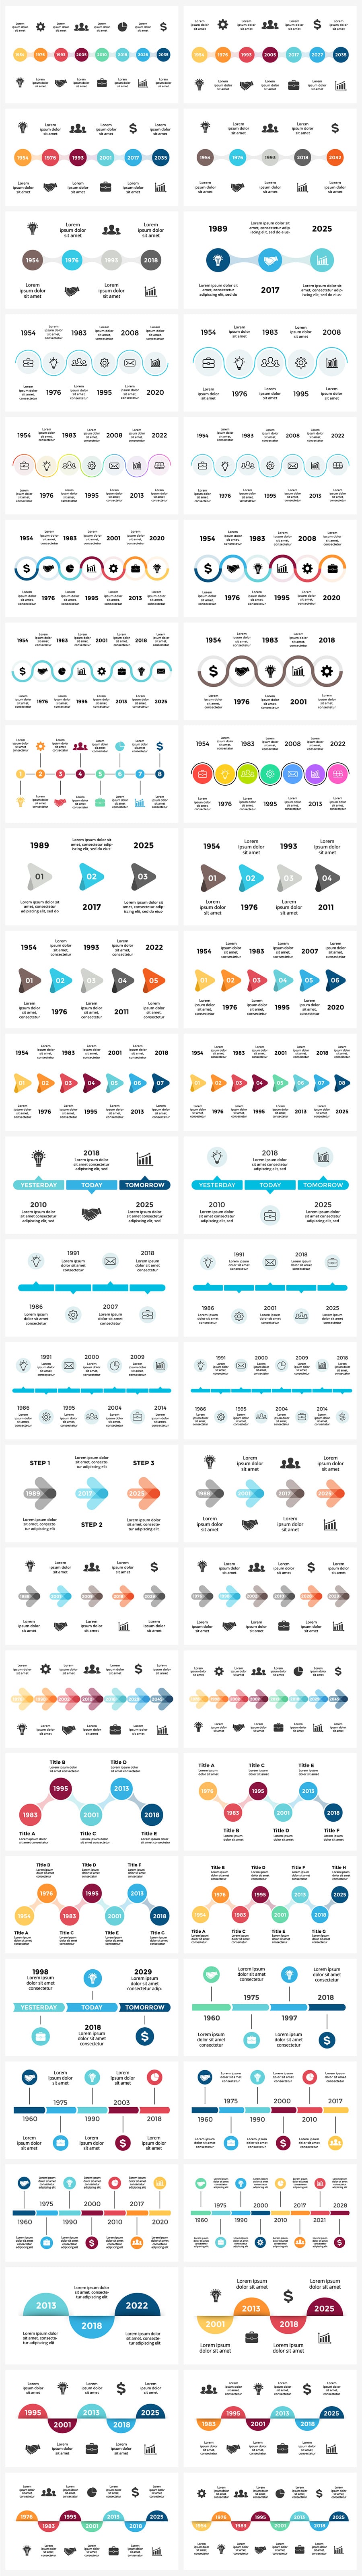 Timeline Infographics | 50 Unique Slides - cover image.